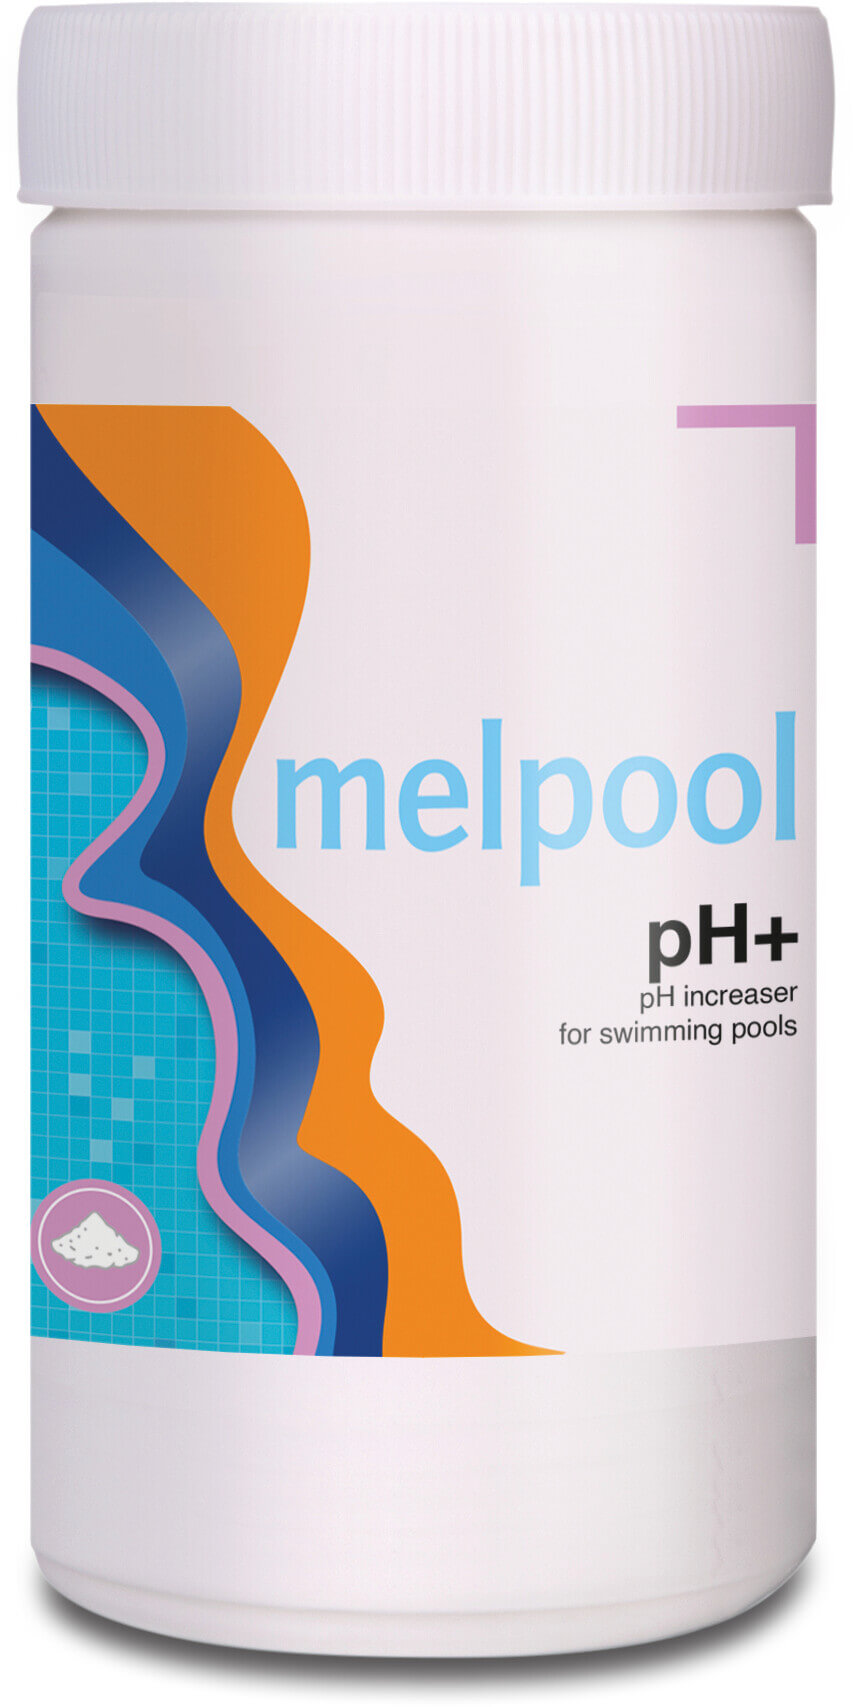 Melpool pH+ sodium carbonate to increase pH 1000g